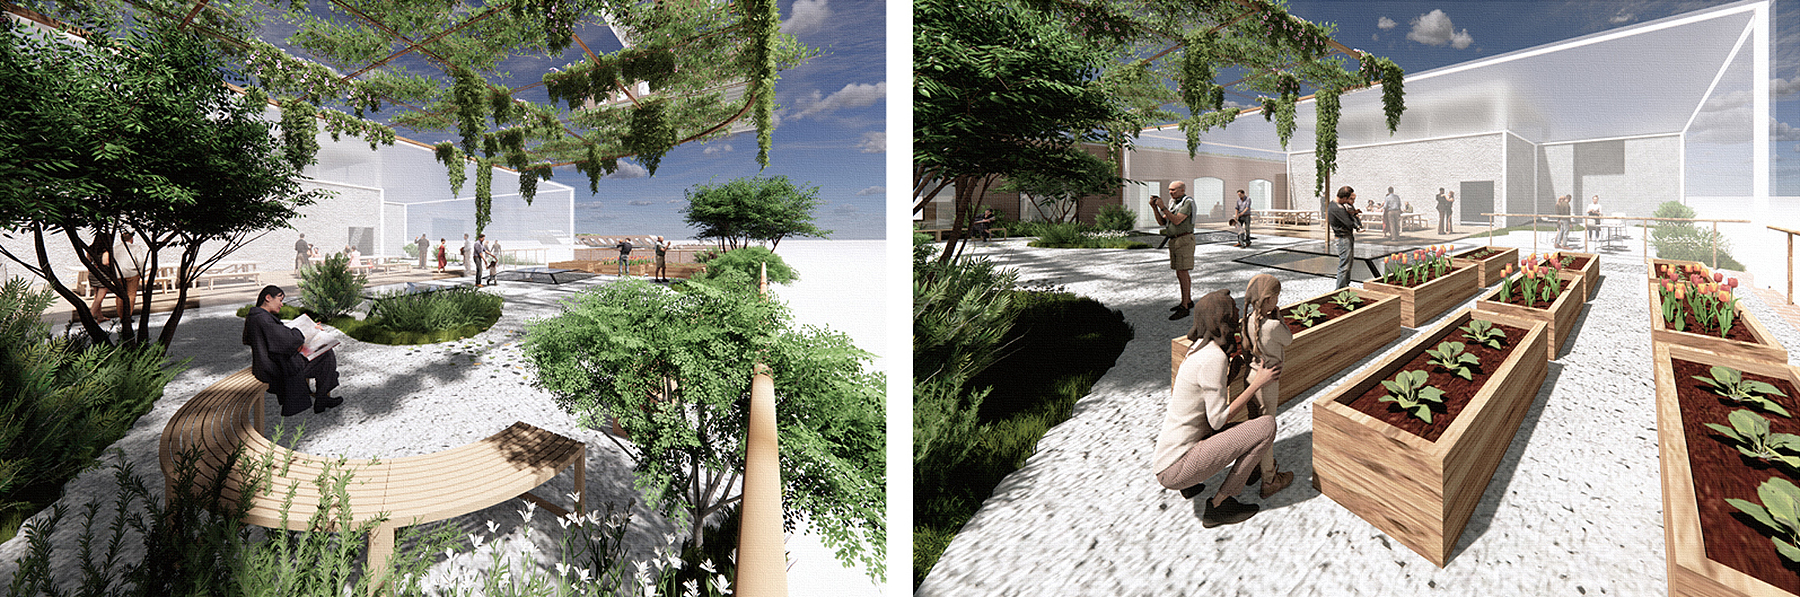 rendering shows a rooftop garden 